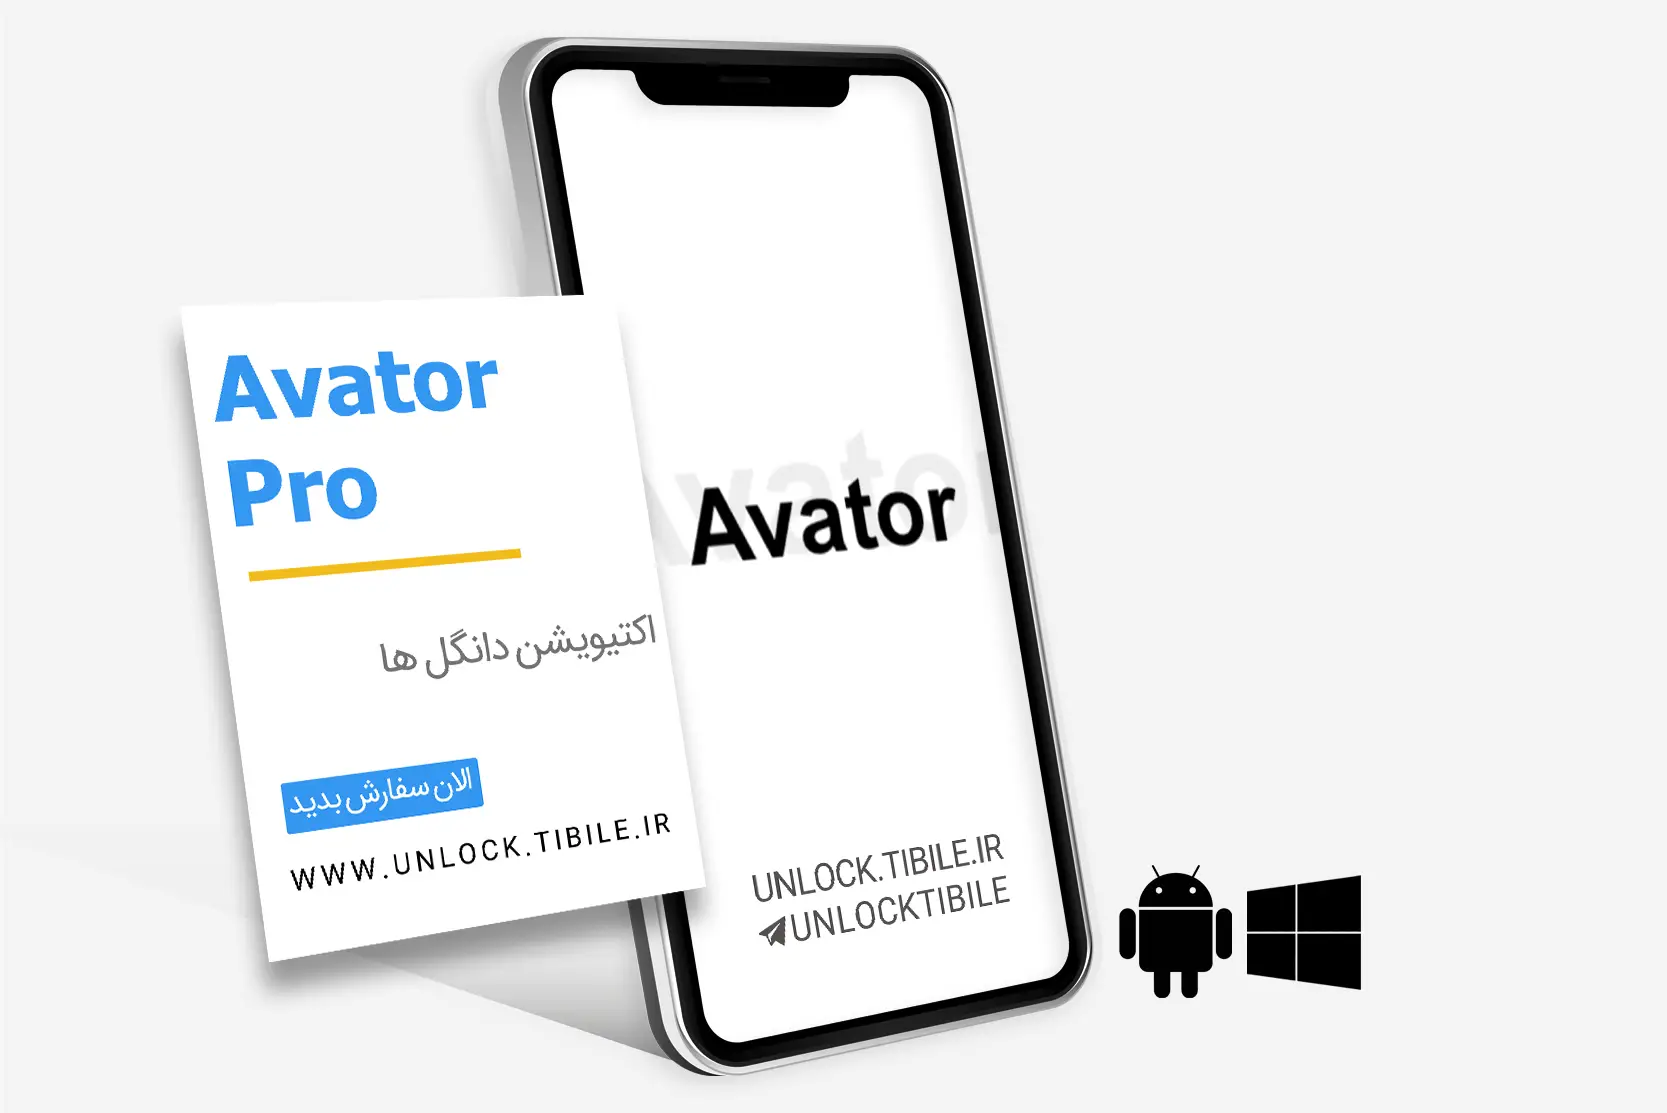 Avator Pro